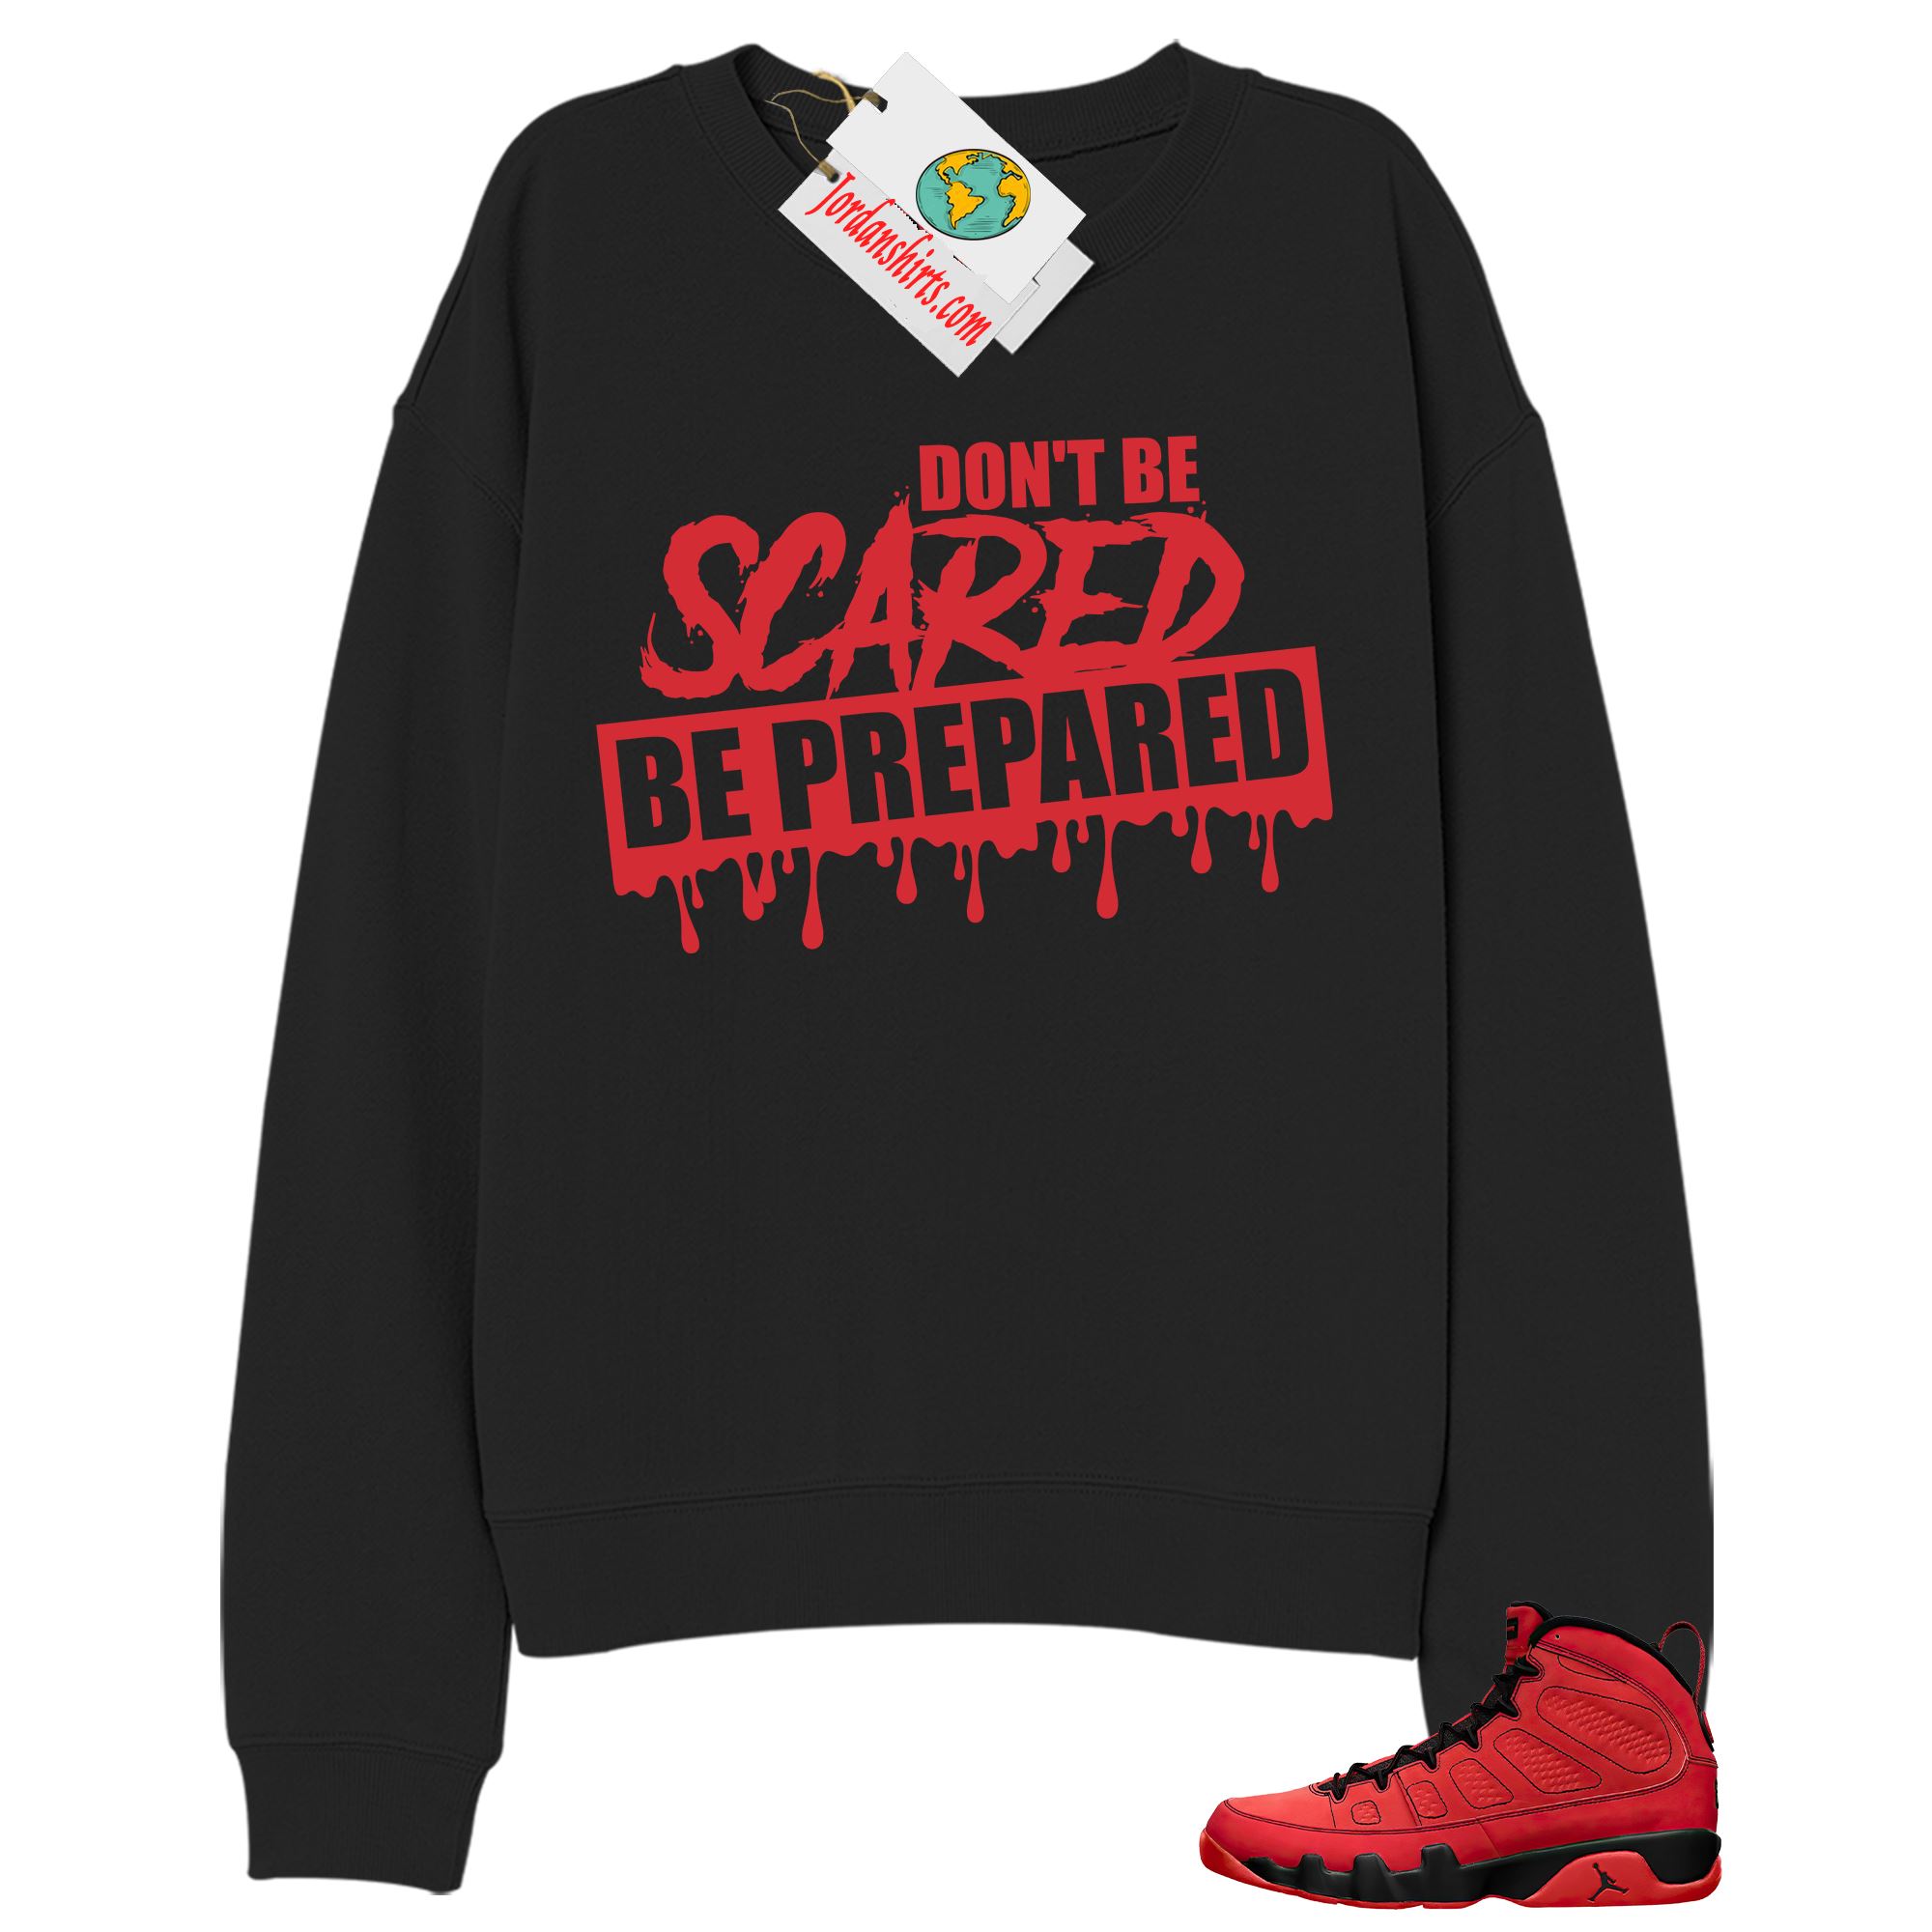 Jordan 9 Sweatshirt, Dont Be Scared Be Prepared Black Sweatshirt Air Jordan 9 Chile Red 9s Full Size Up To 5xl